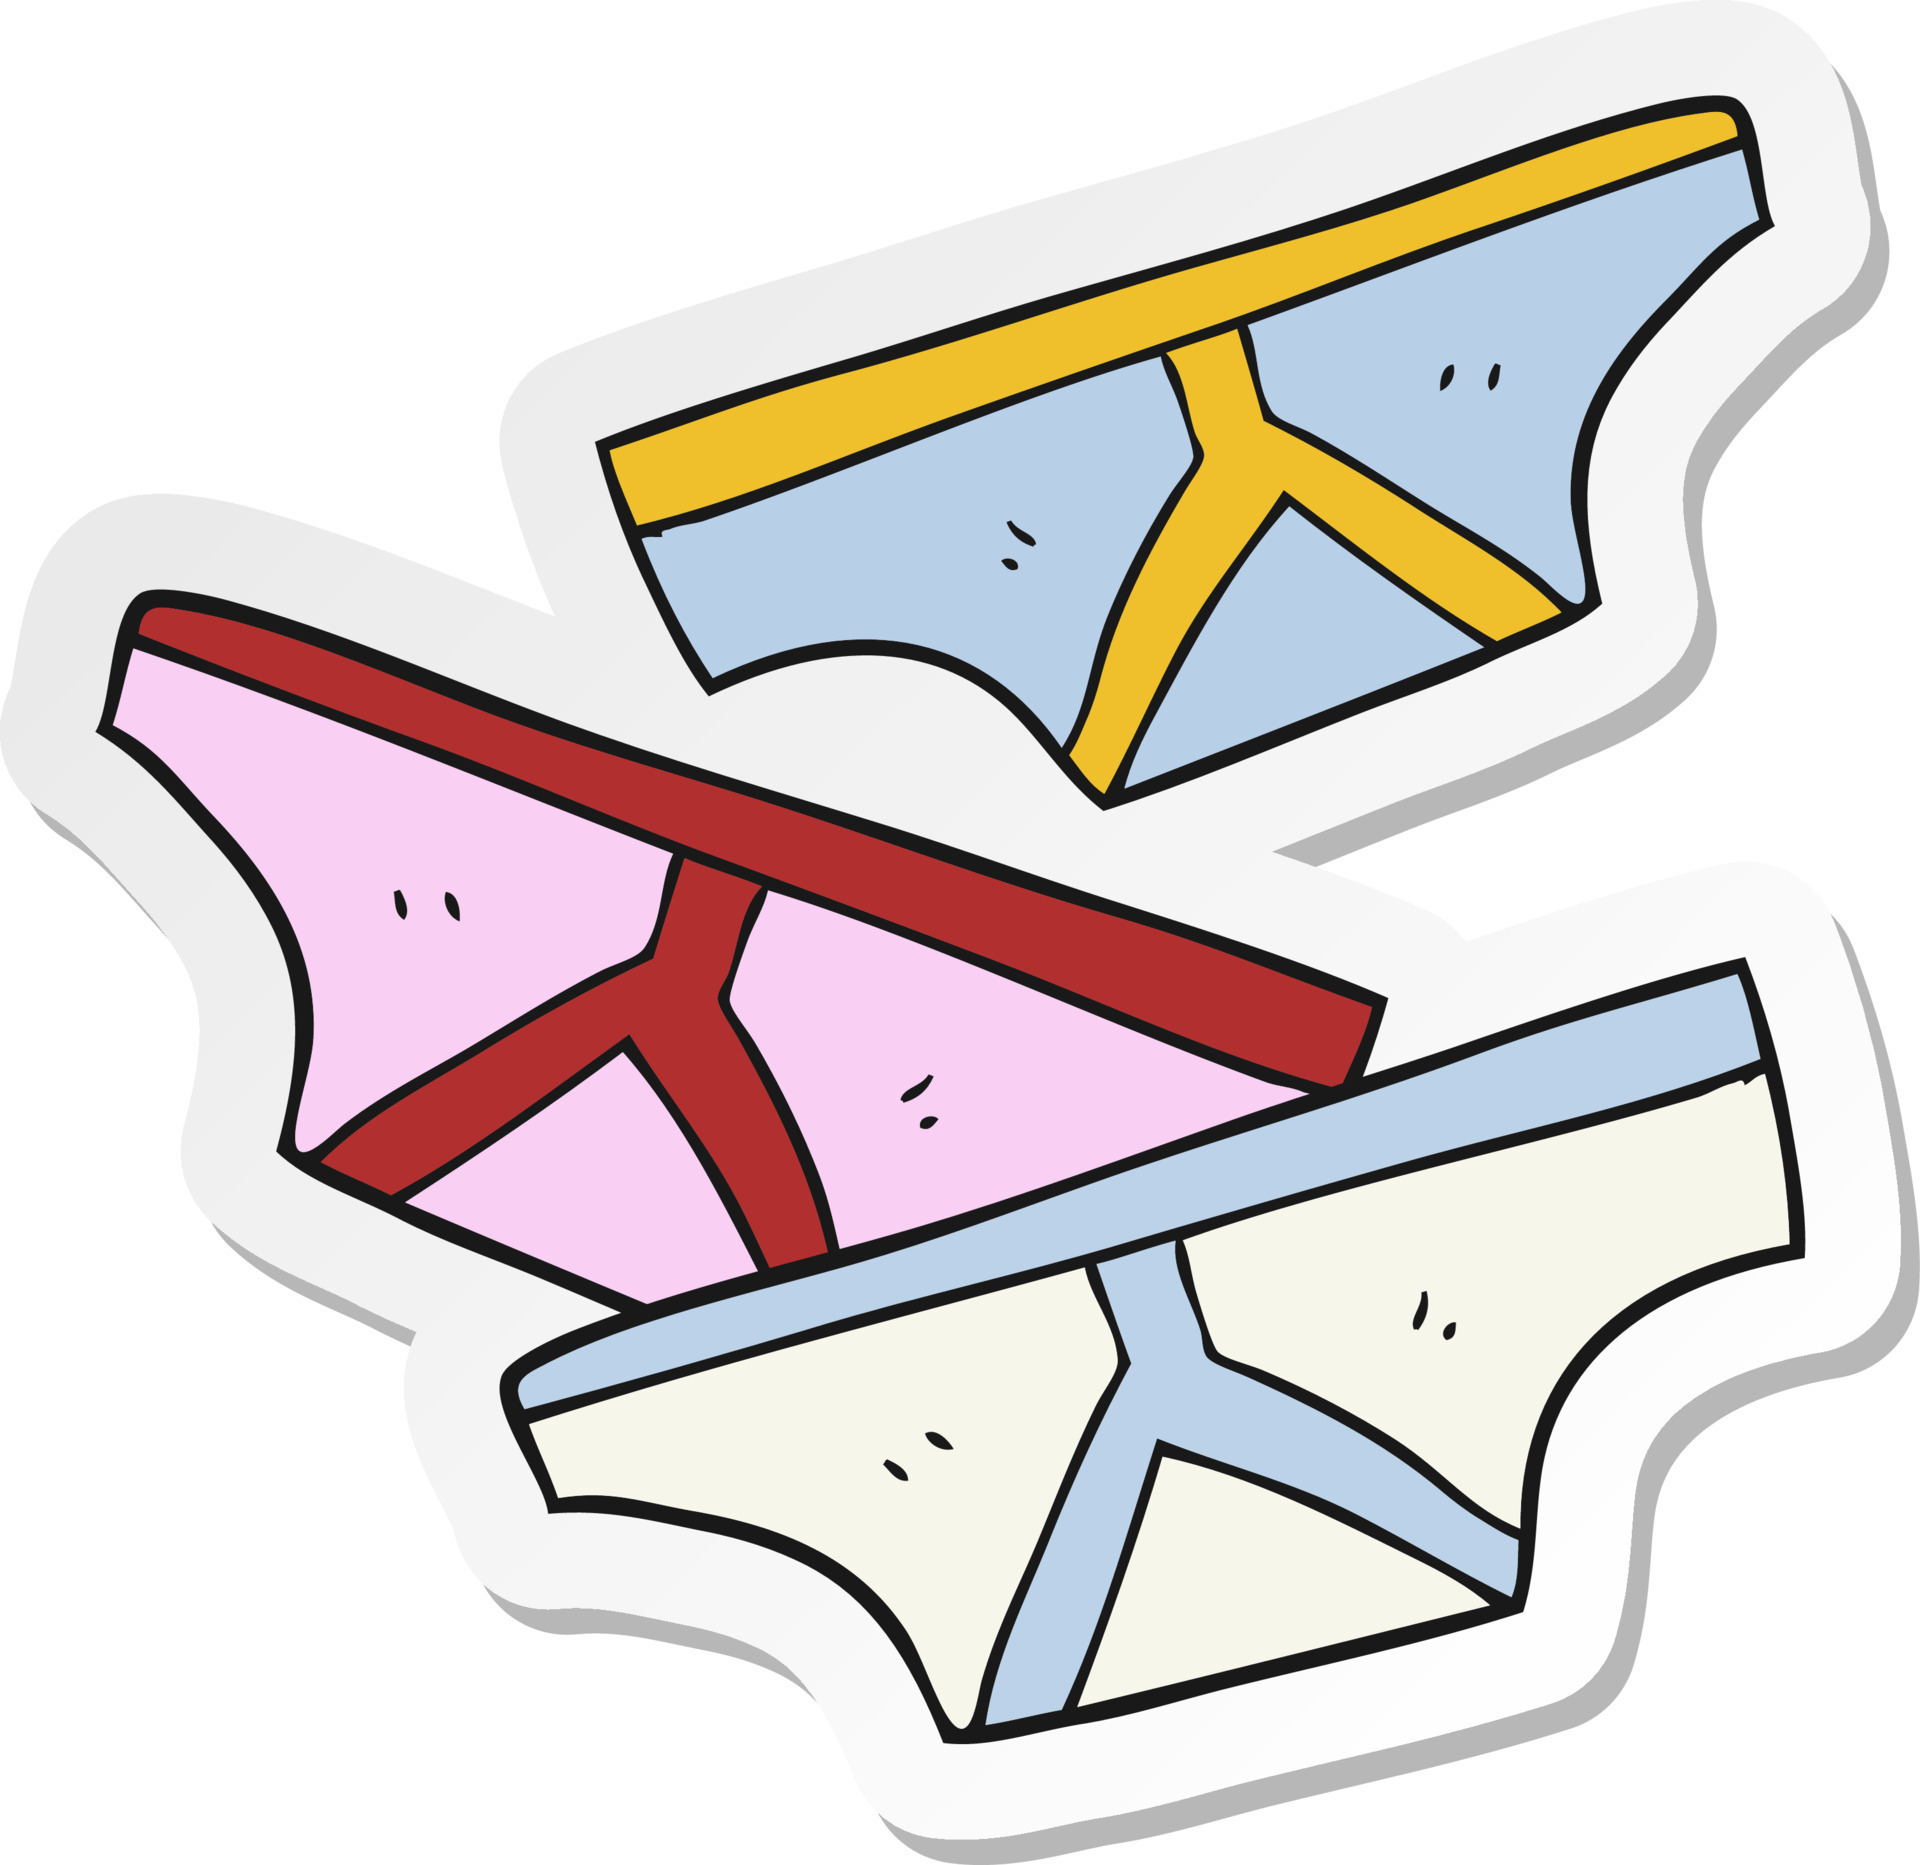 https://static.vecteezy.com/system/resources/previews/010/643/665/original/sticker-of-a-cartoon-underpants-vector.jpg